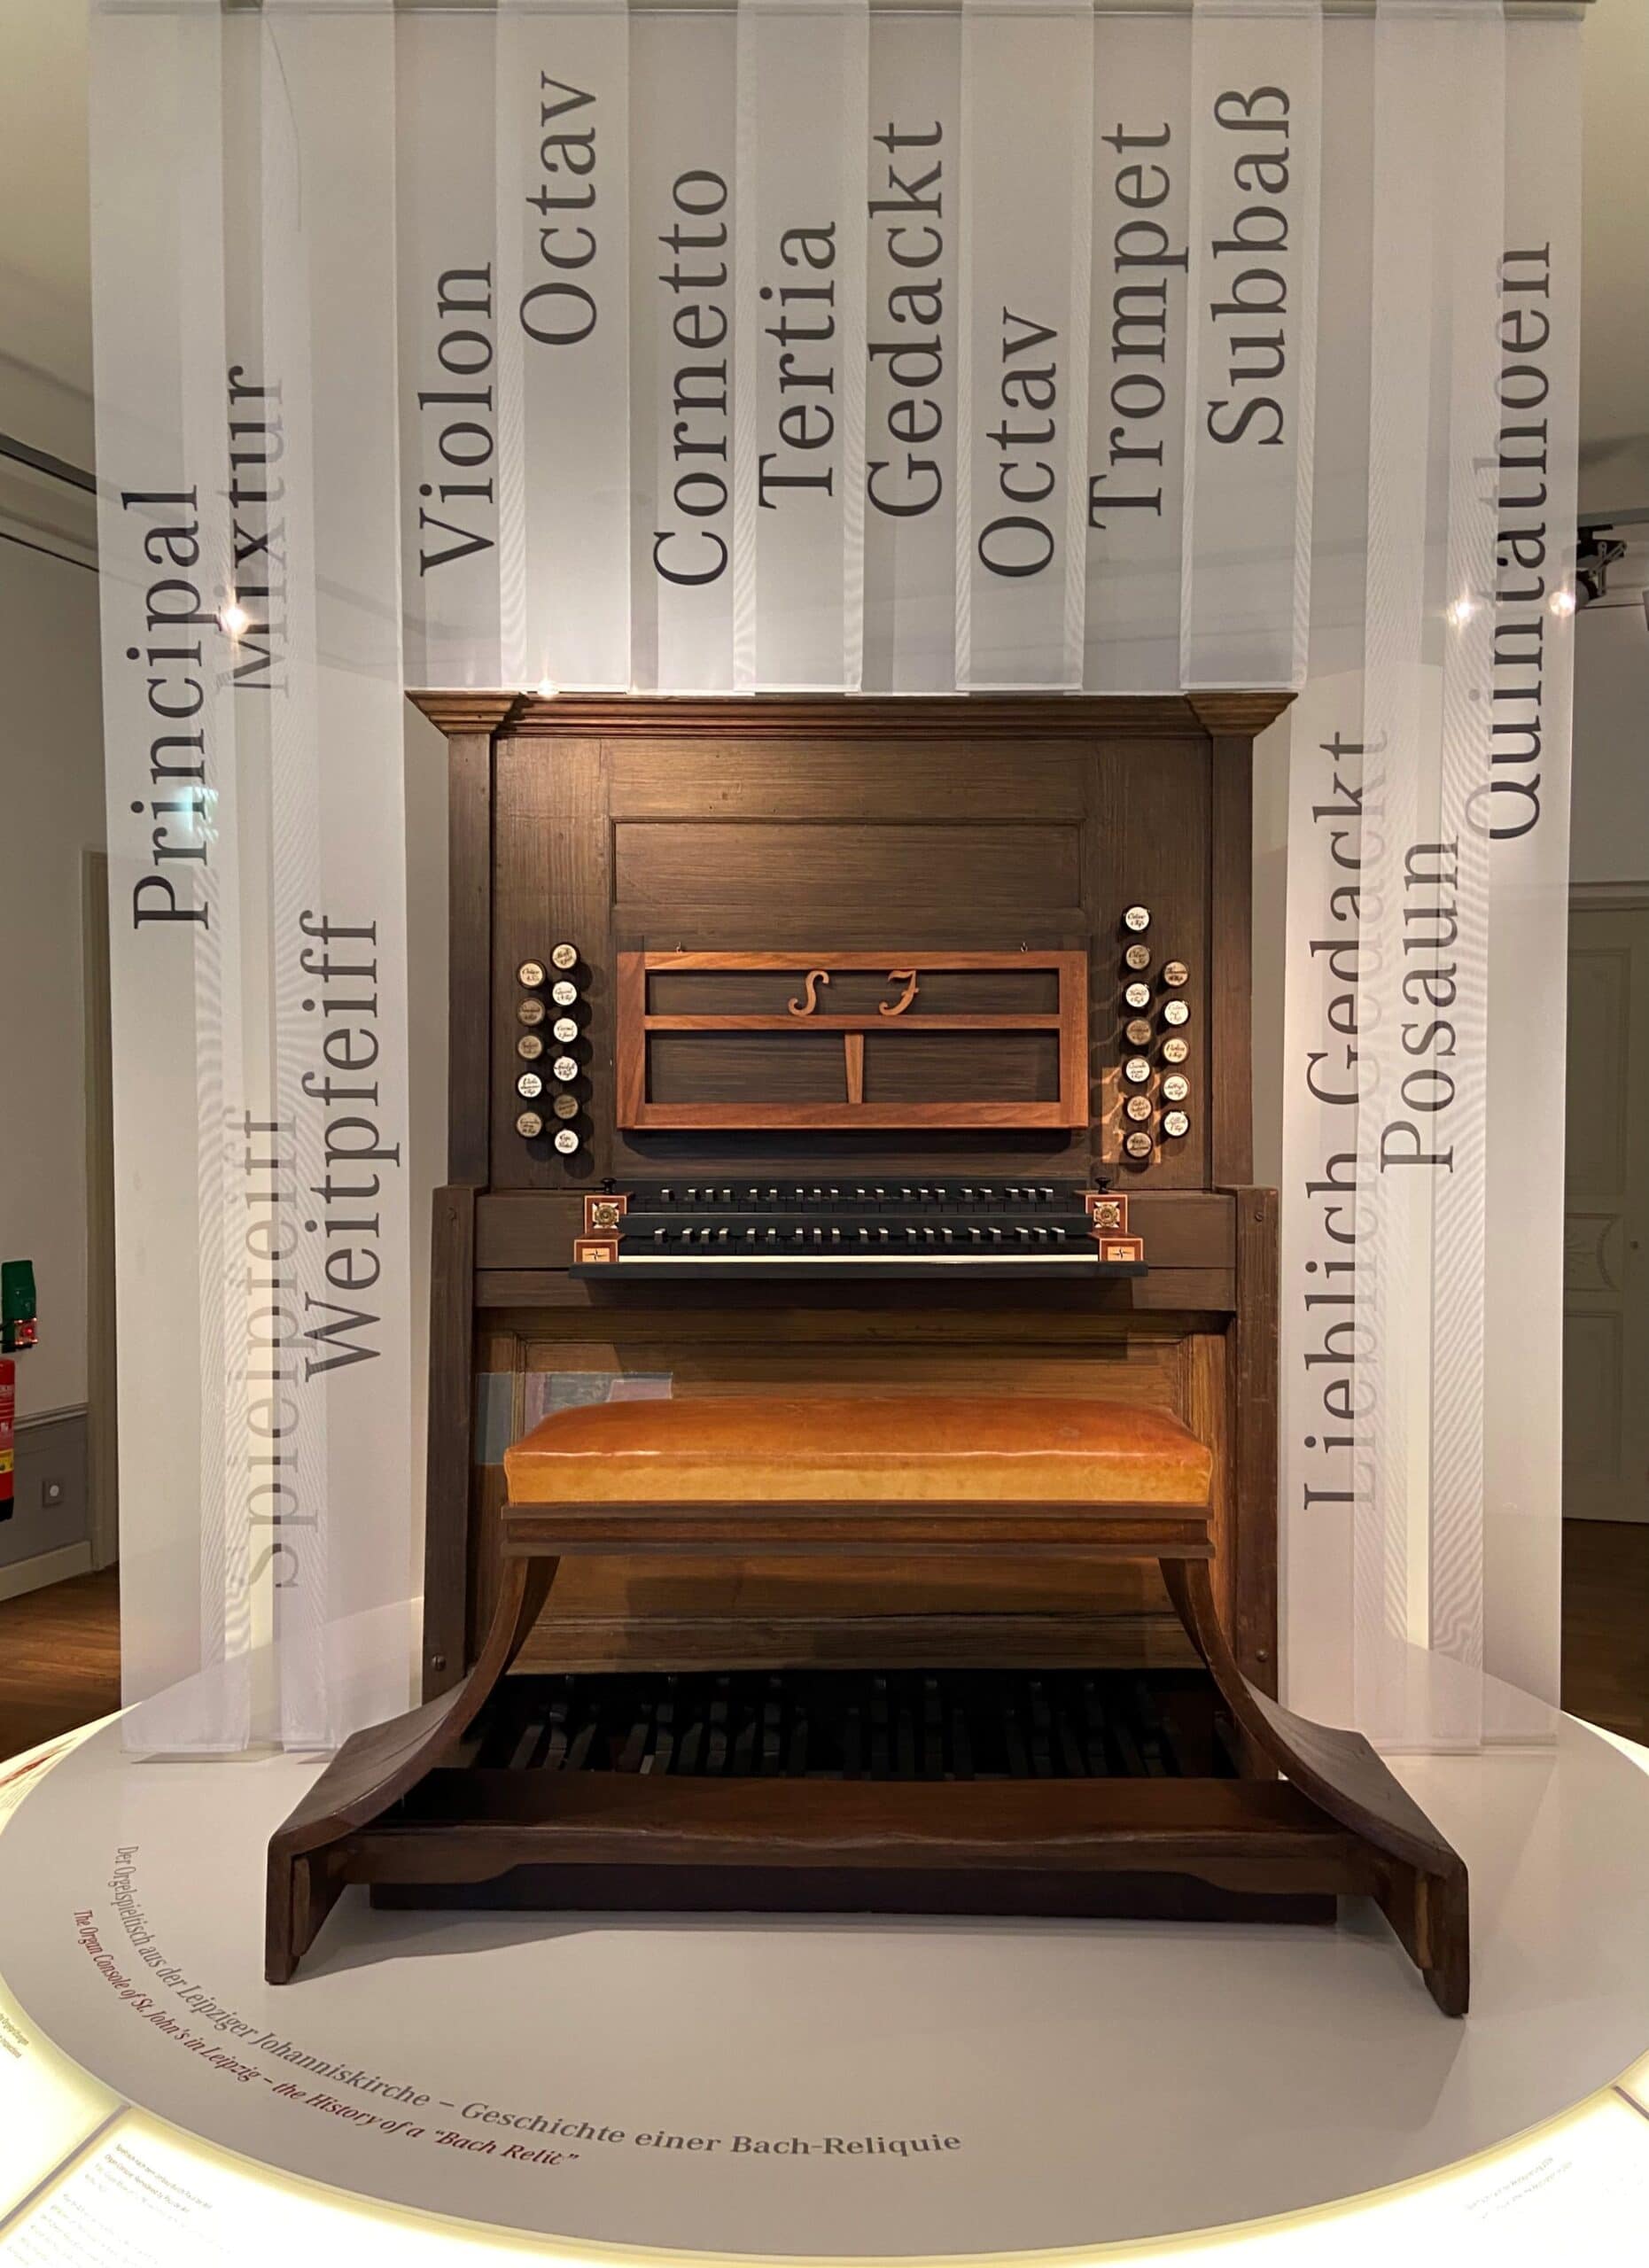 Leipzig, foto organ Jerman di Museum Bach